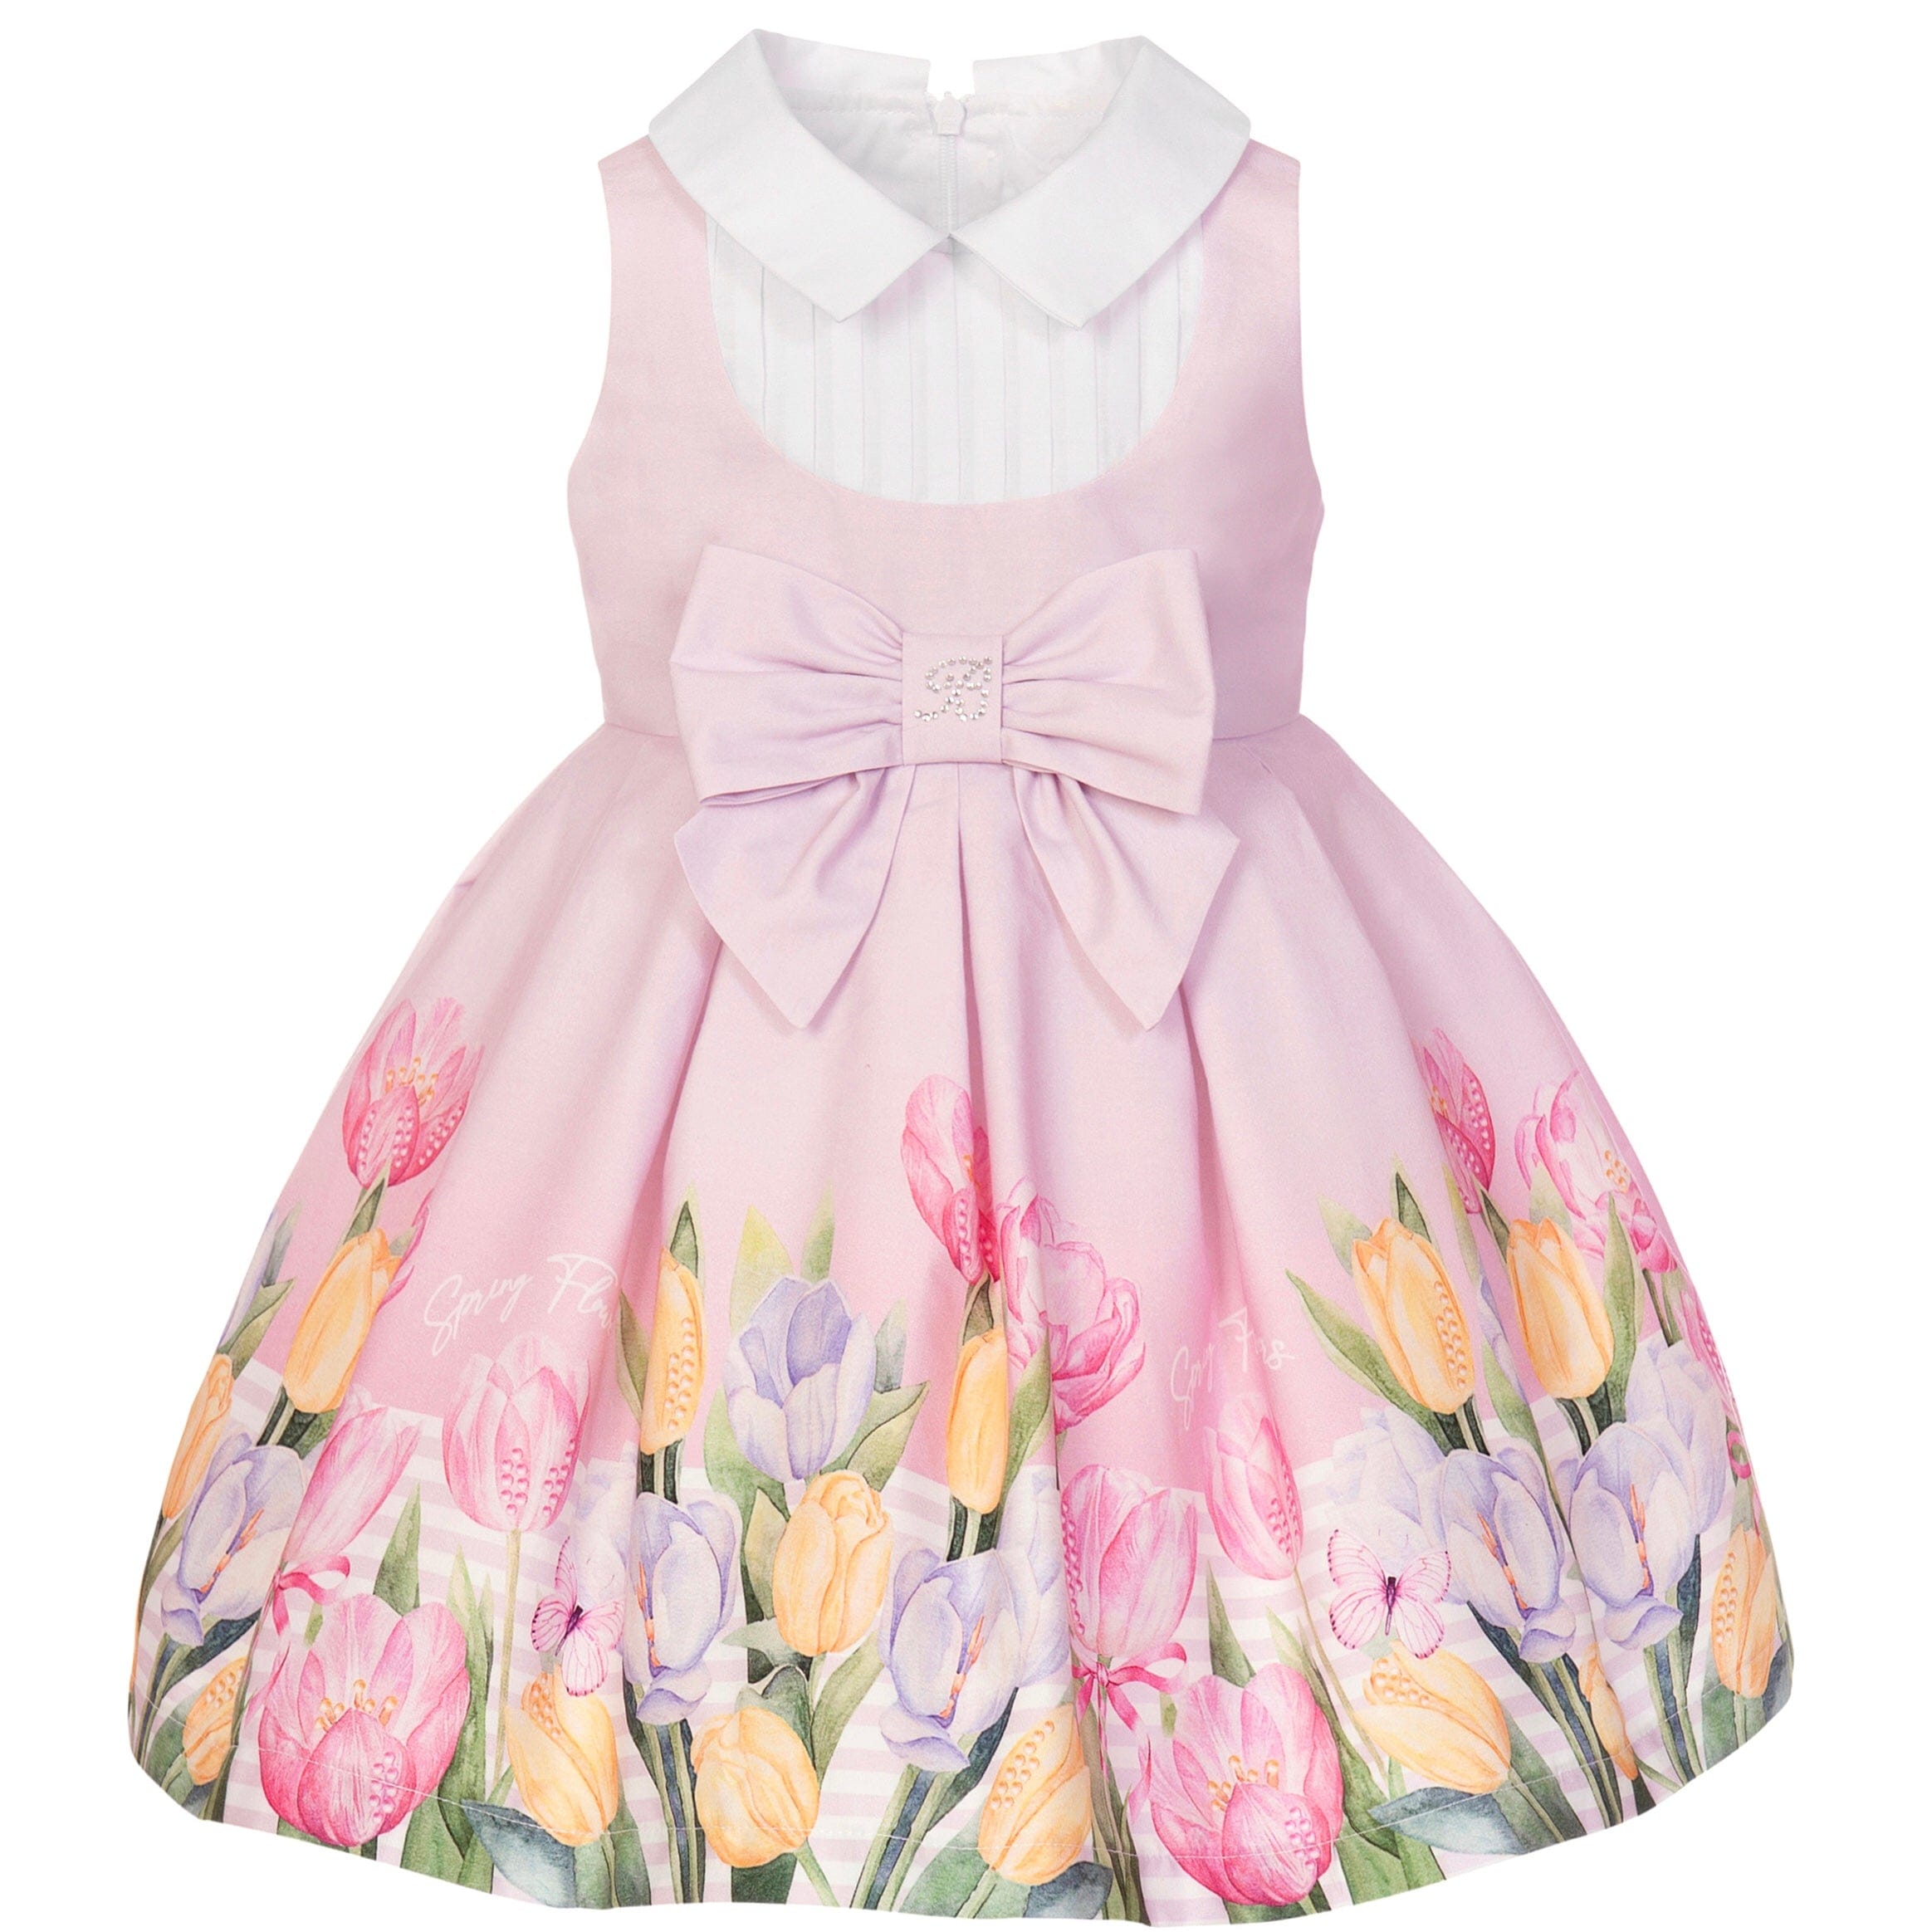 BALLOON CHIC - Tulip Blouse Dress - Pink